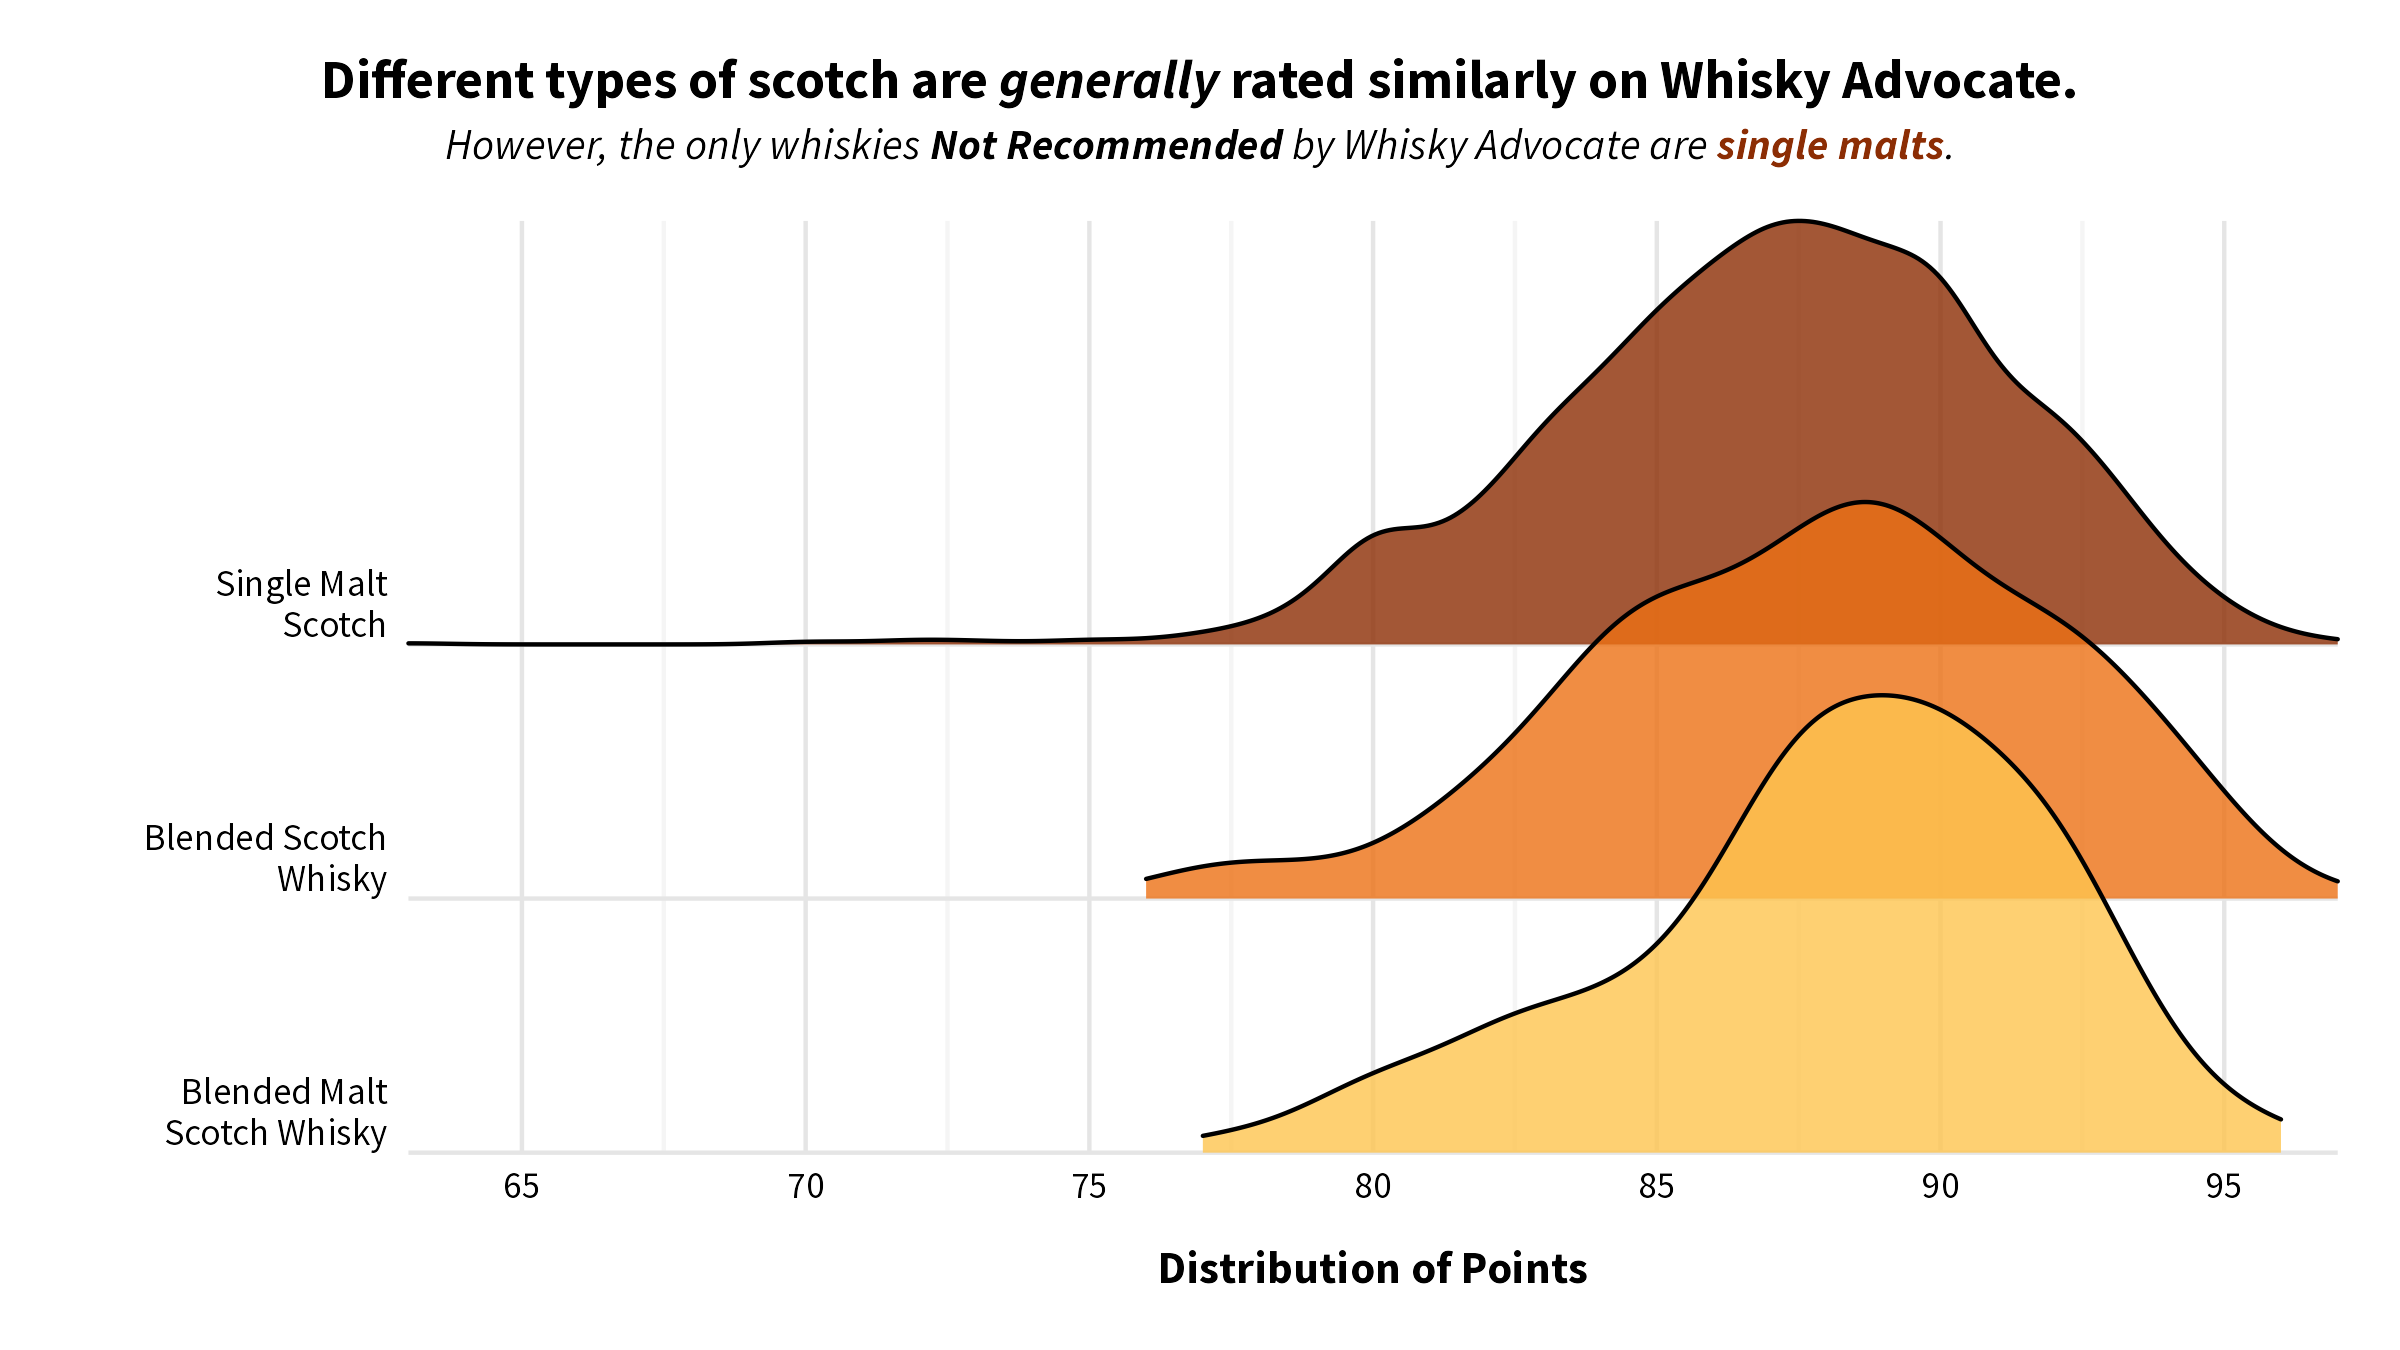 Ridgeline plot by scotch rating points.